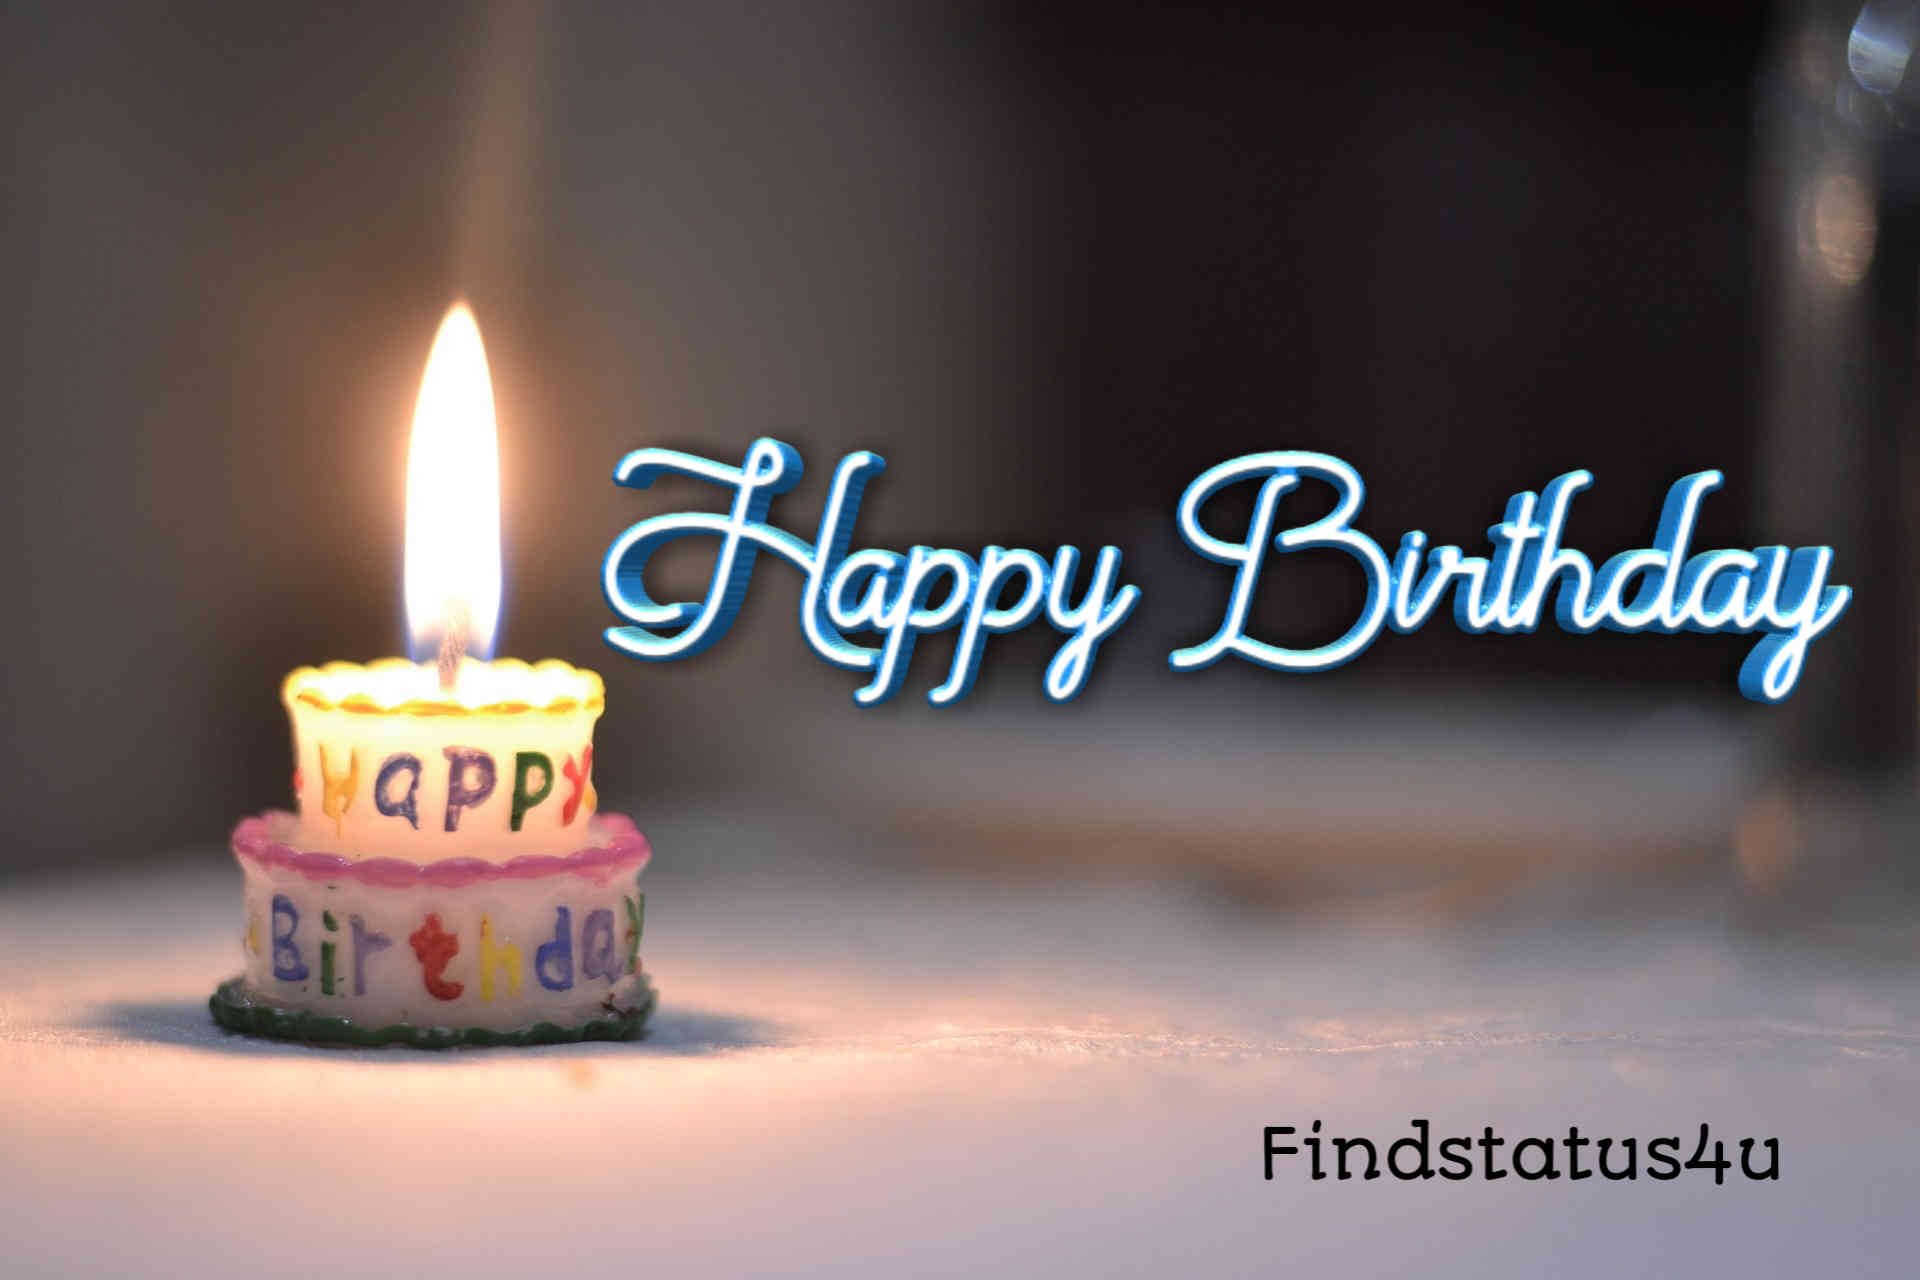 Happy Birthday Status For Friend In English Best Friend Birthday Wishes